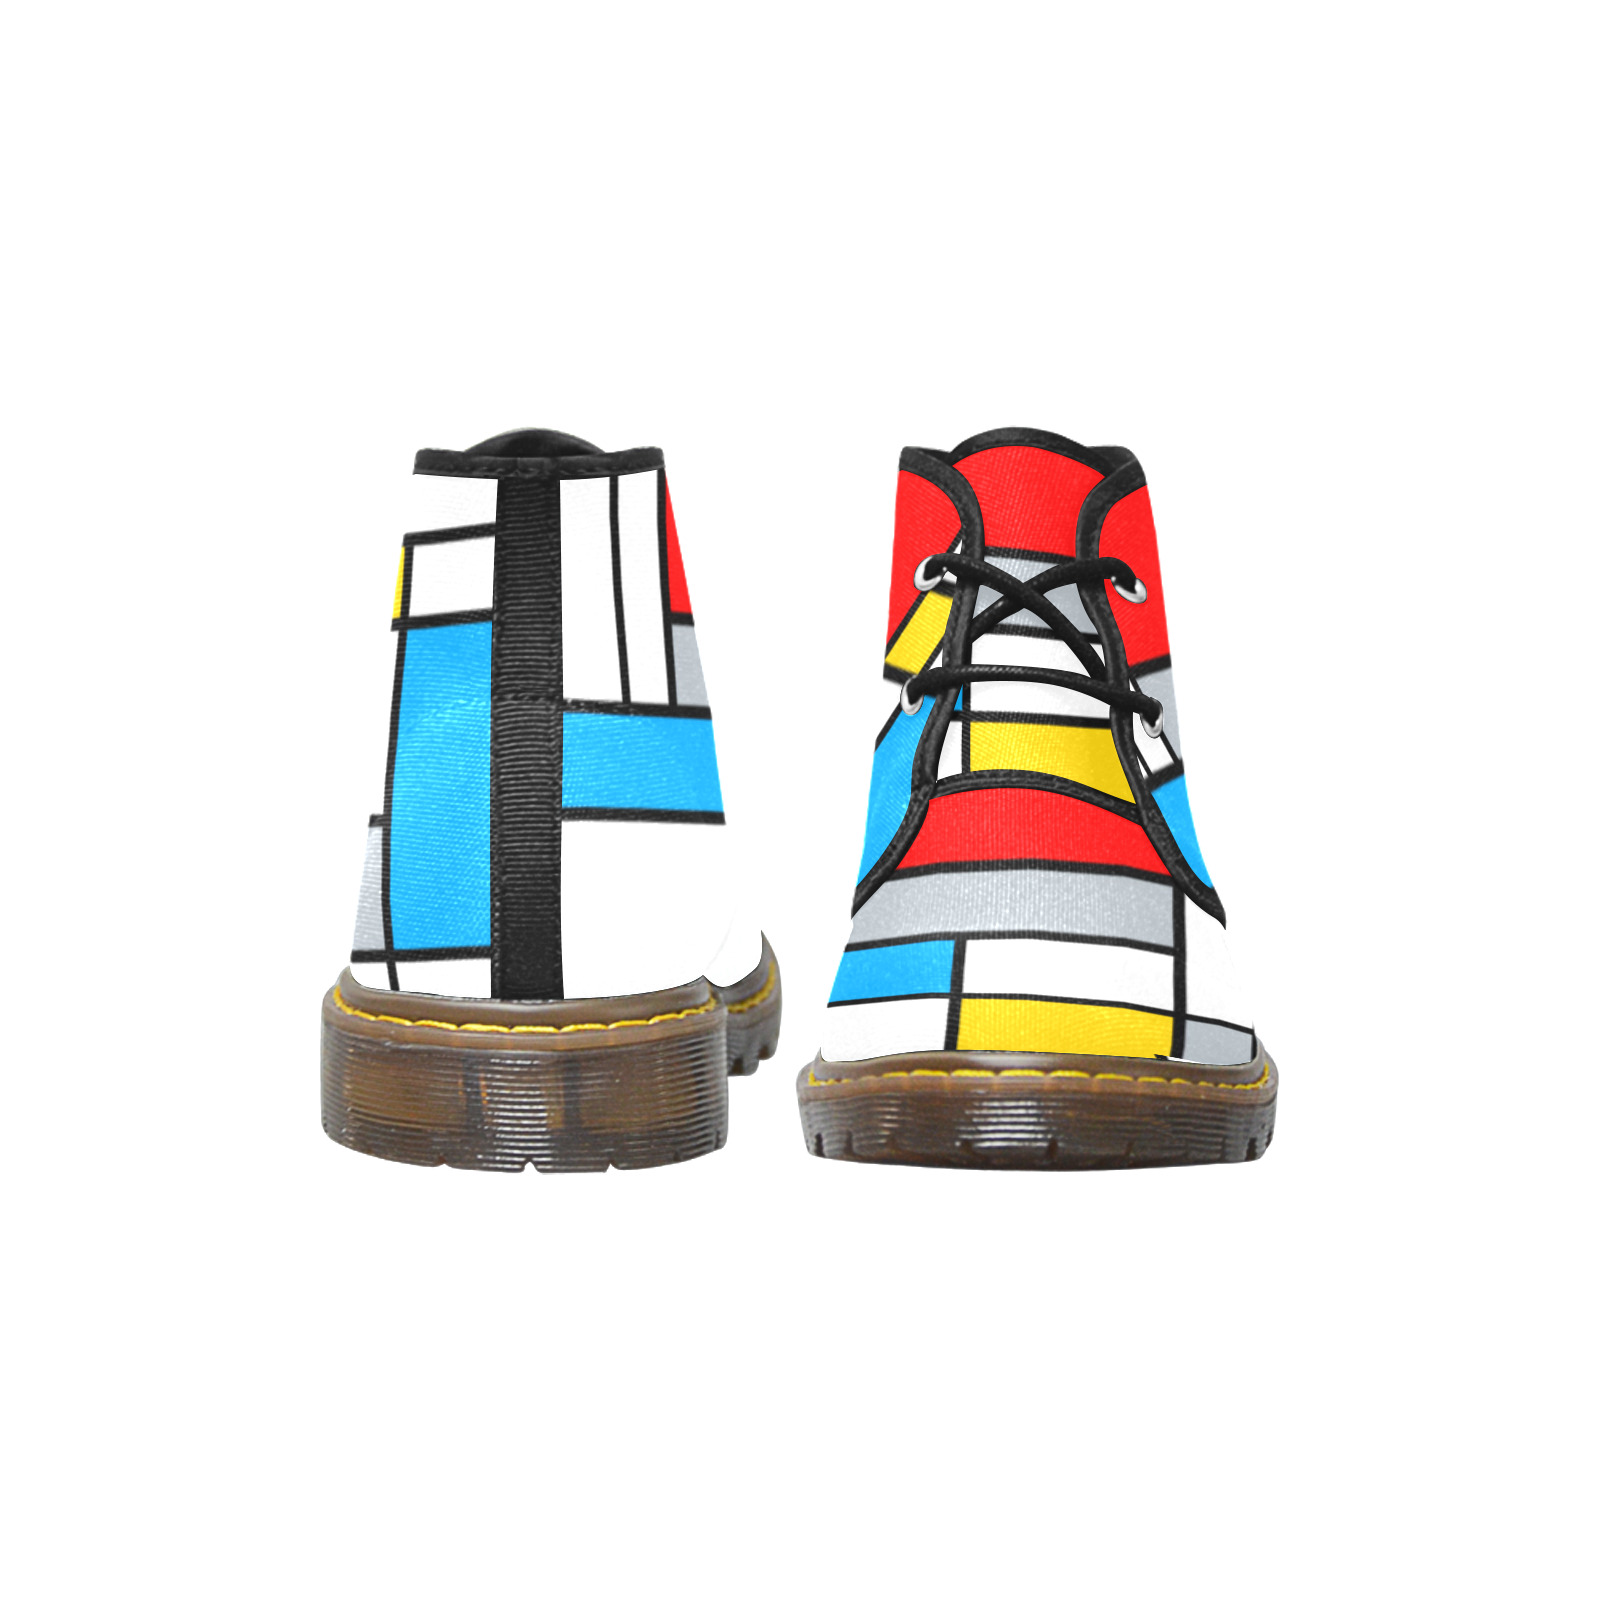 Mondrian Style Color Composition Geometric Retro Art Women's Canvas Chukka Boots (Model 2402-1)